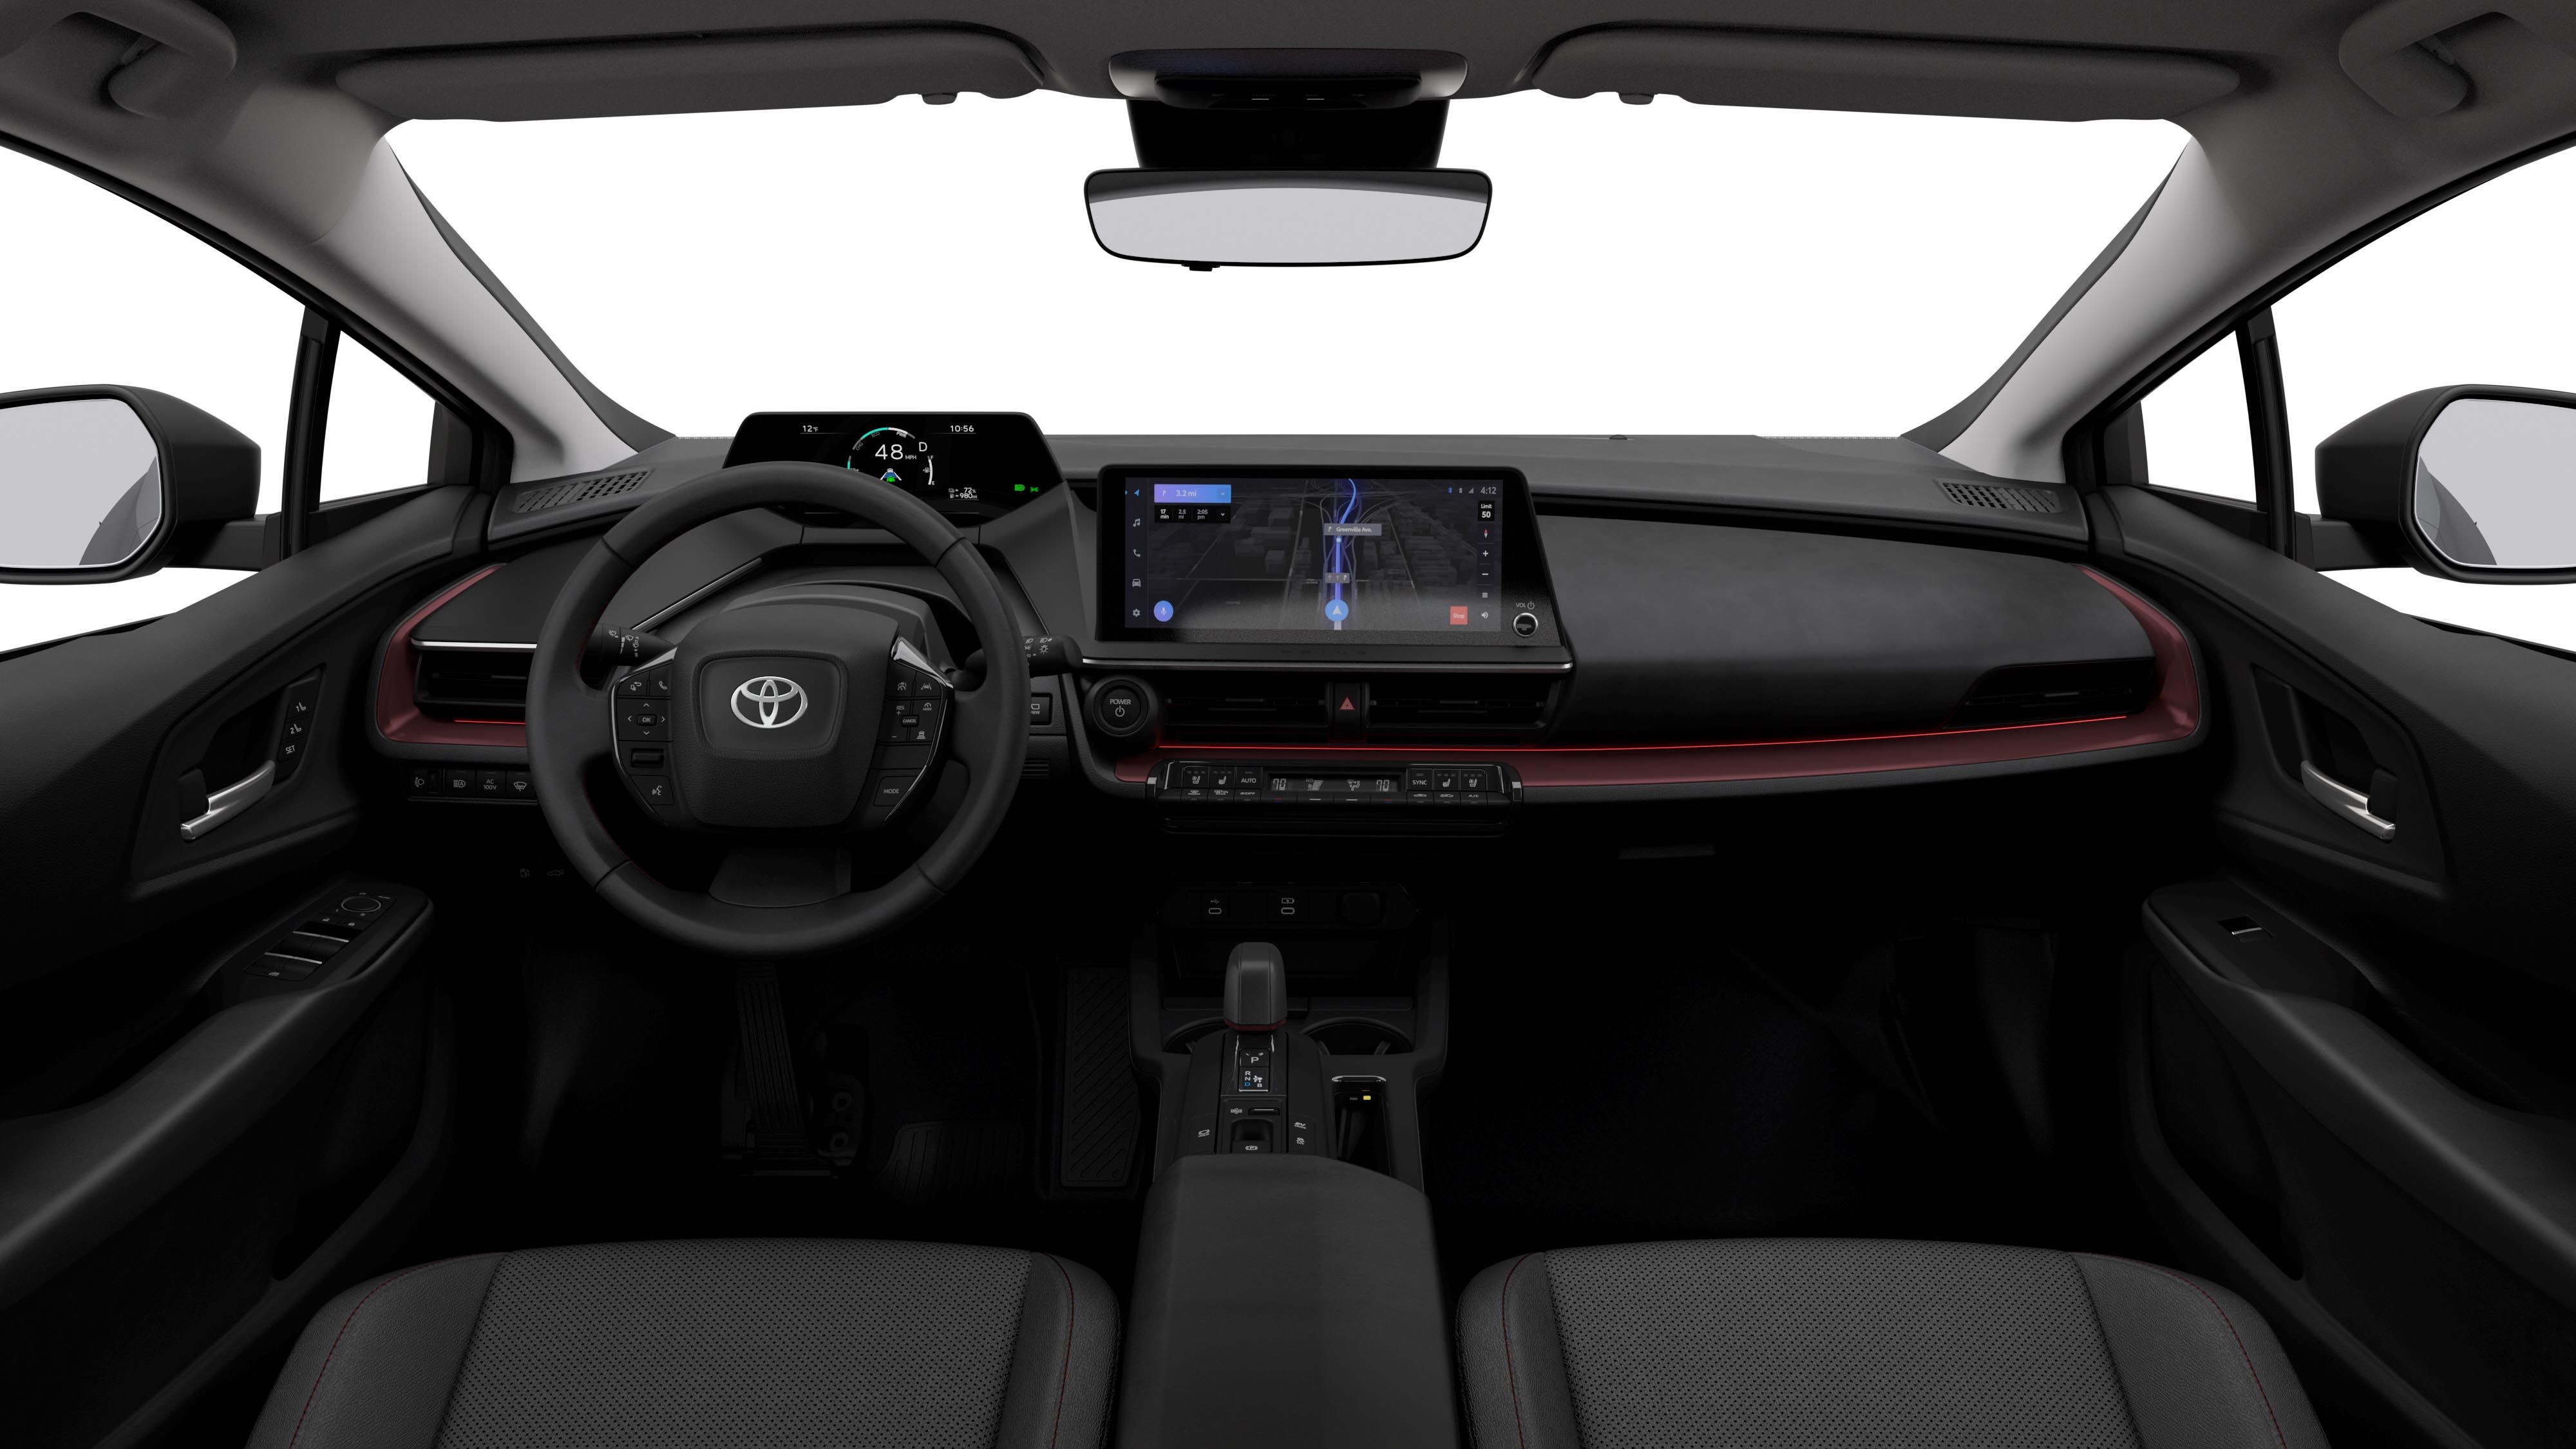 2023 Toyota Prius Japan Interior 1668576156 